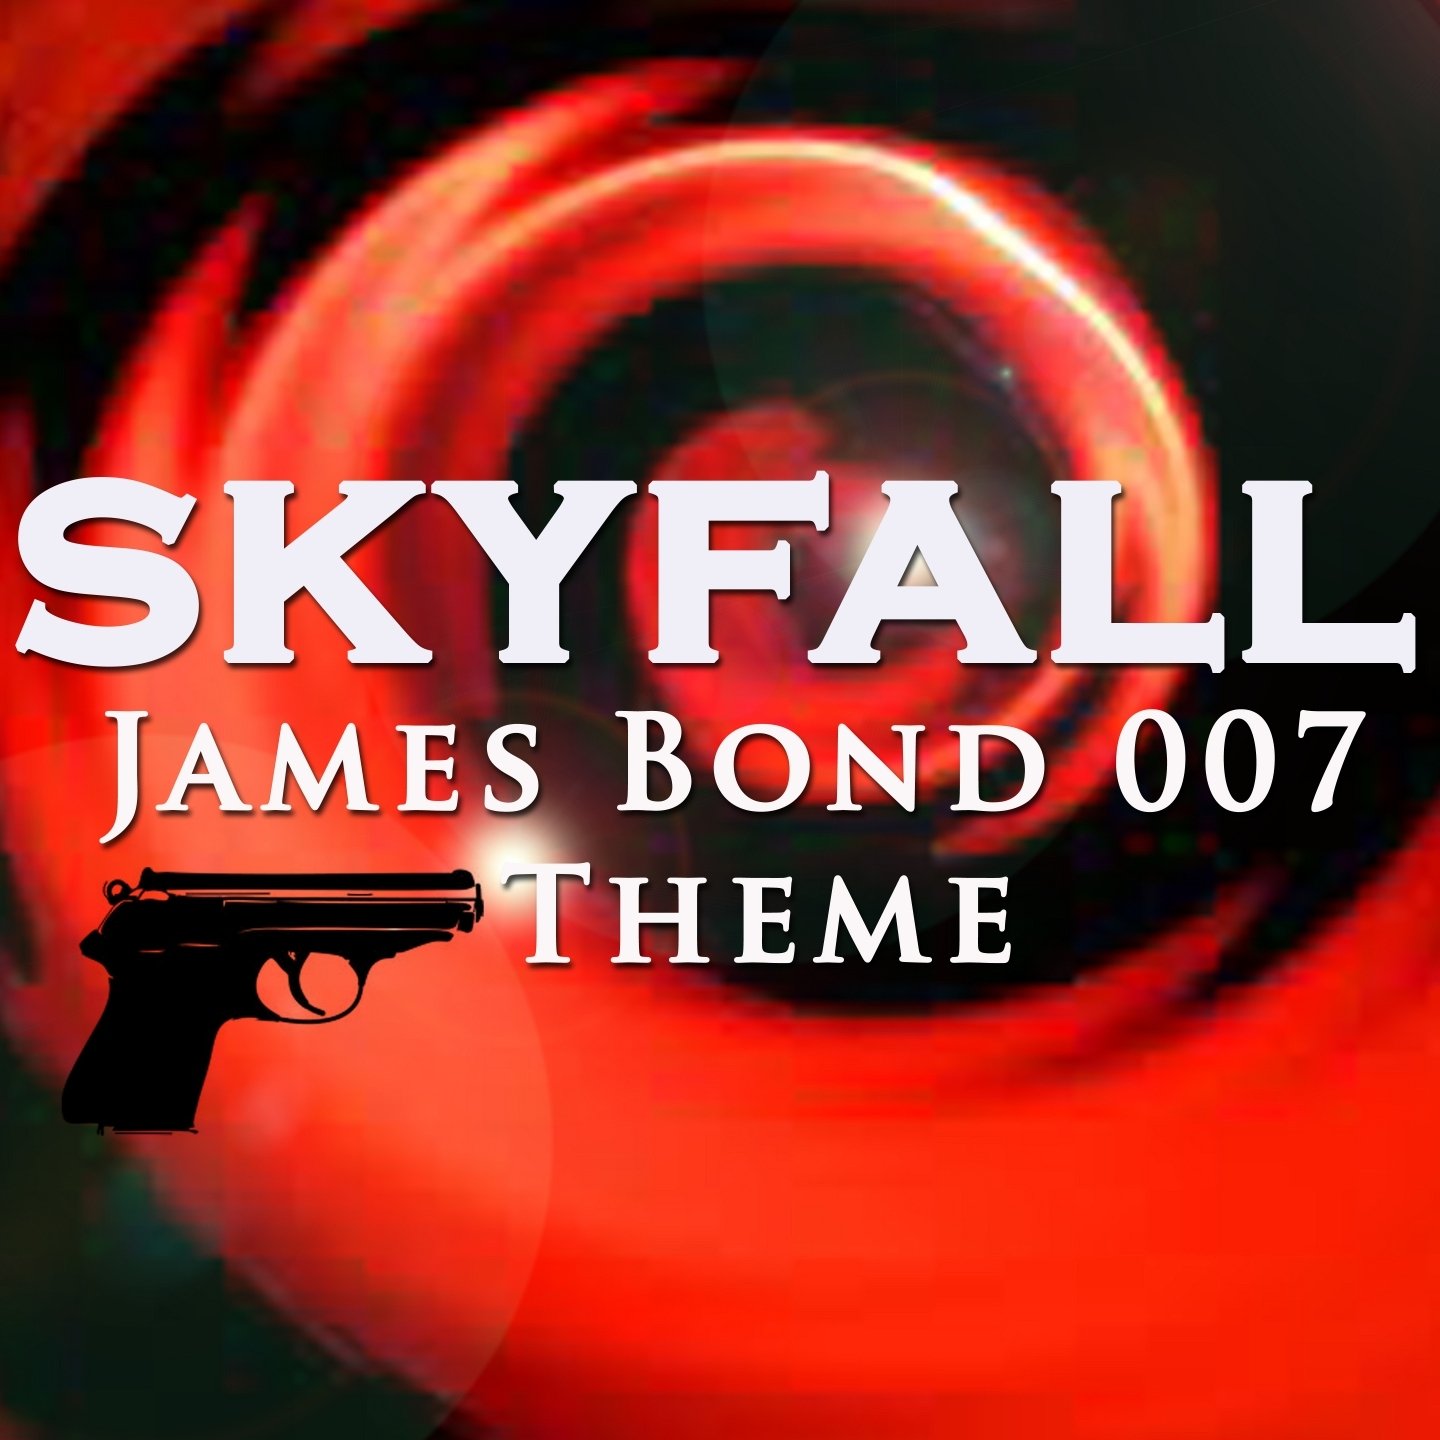 007 Skyfall песня. Минусовка Skyfall. Only hits